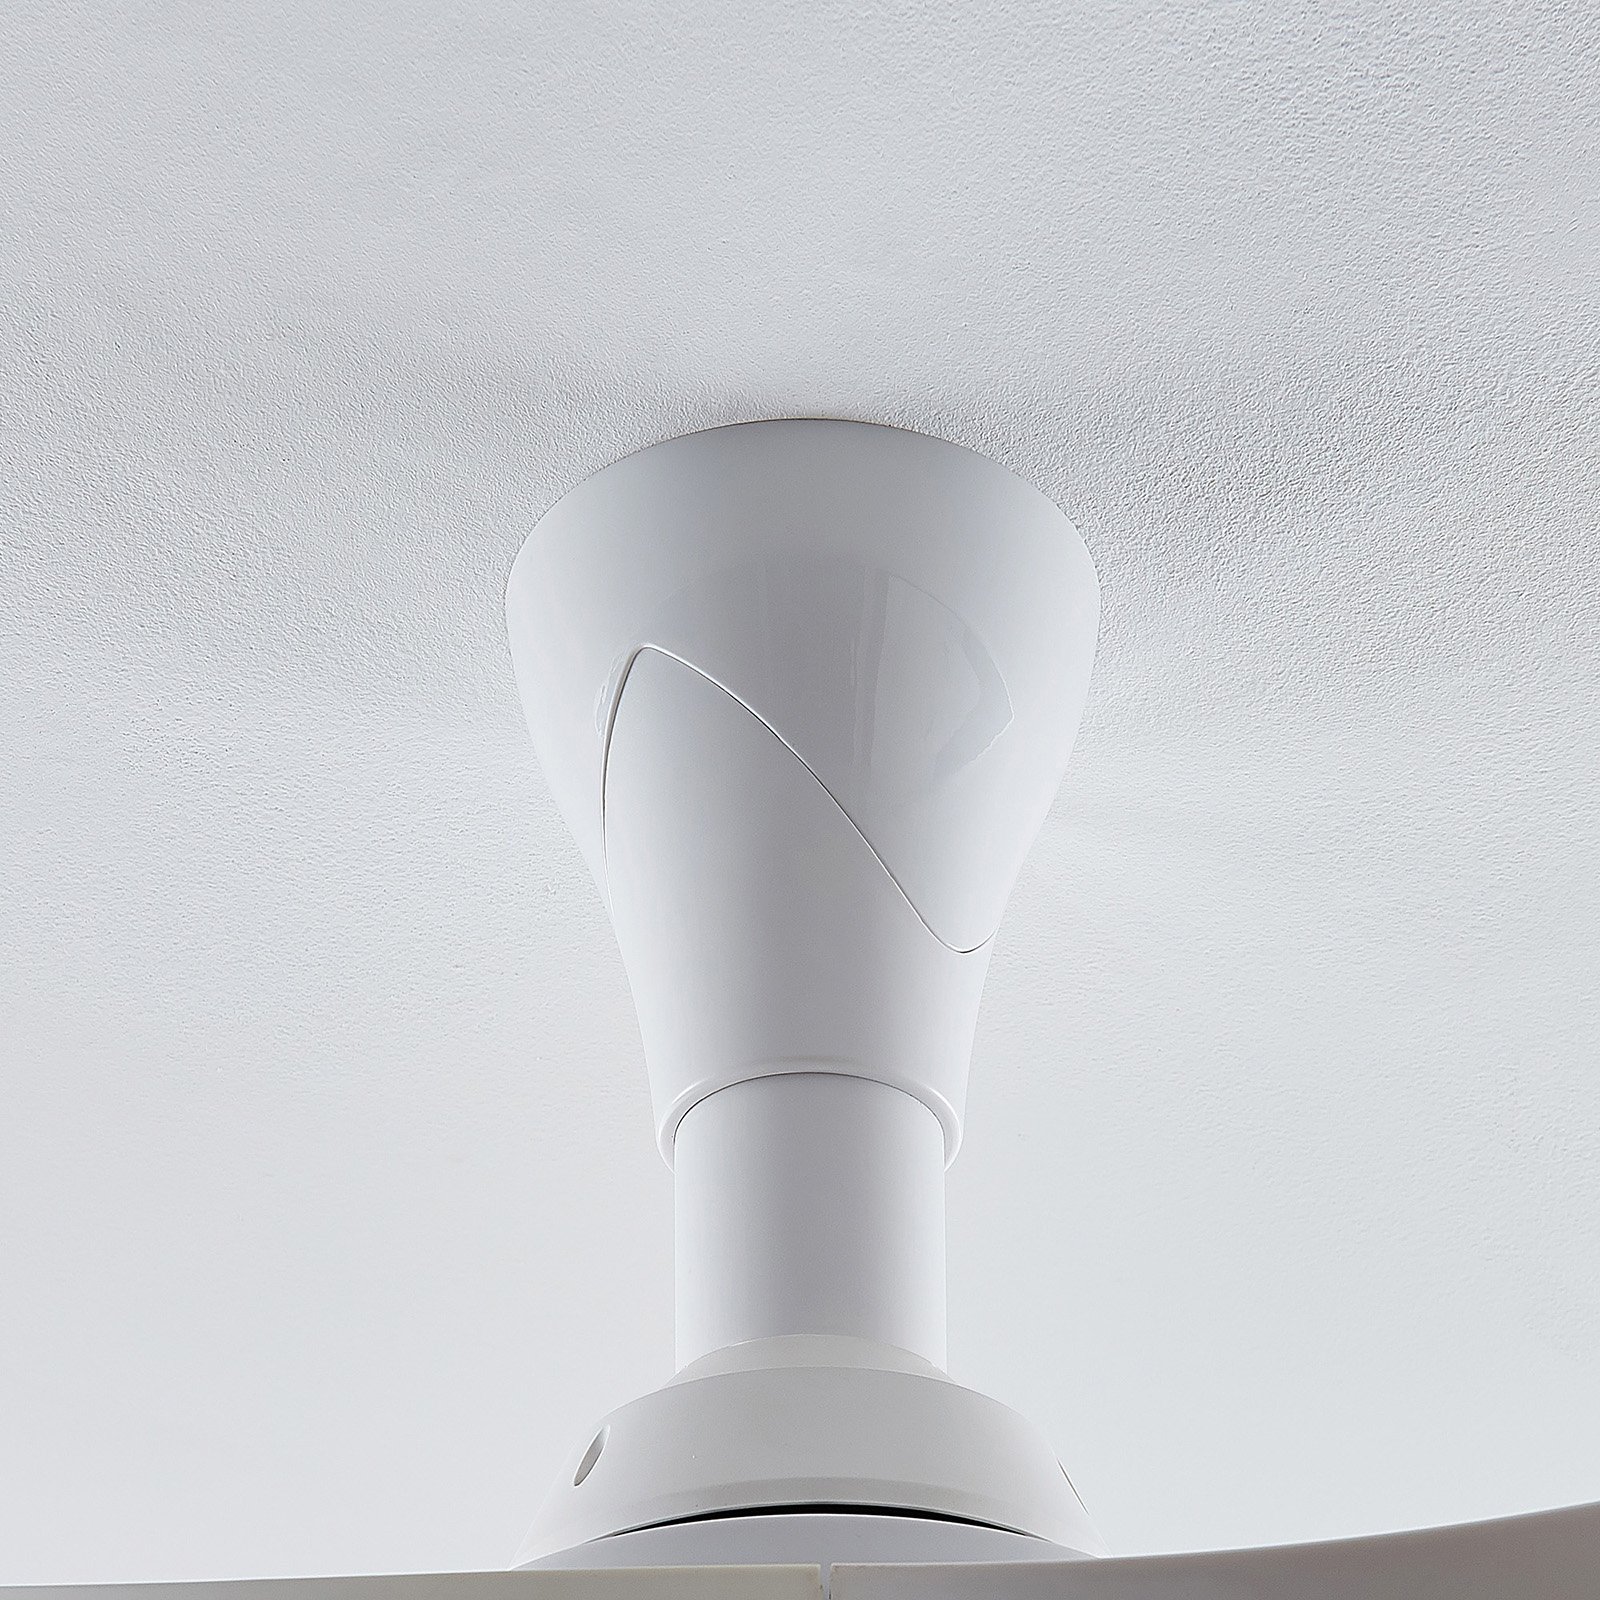 Starluna Borga LED ceiling fan 3 blades, white